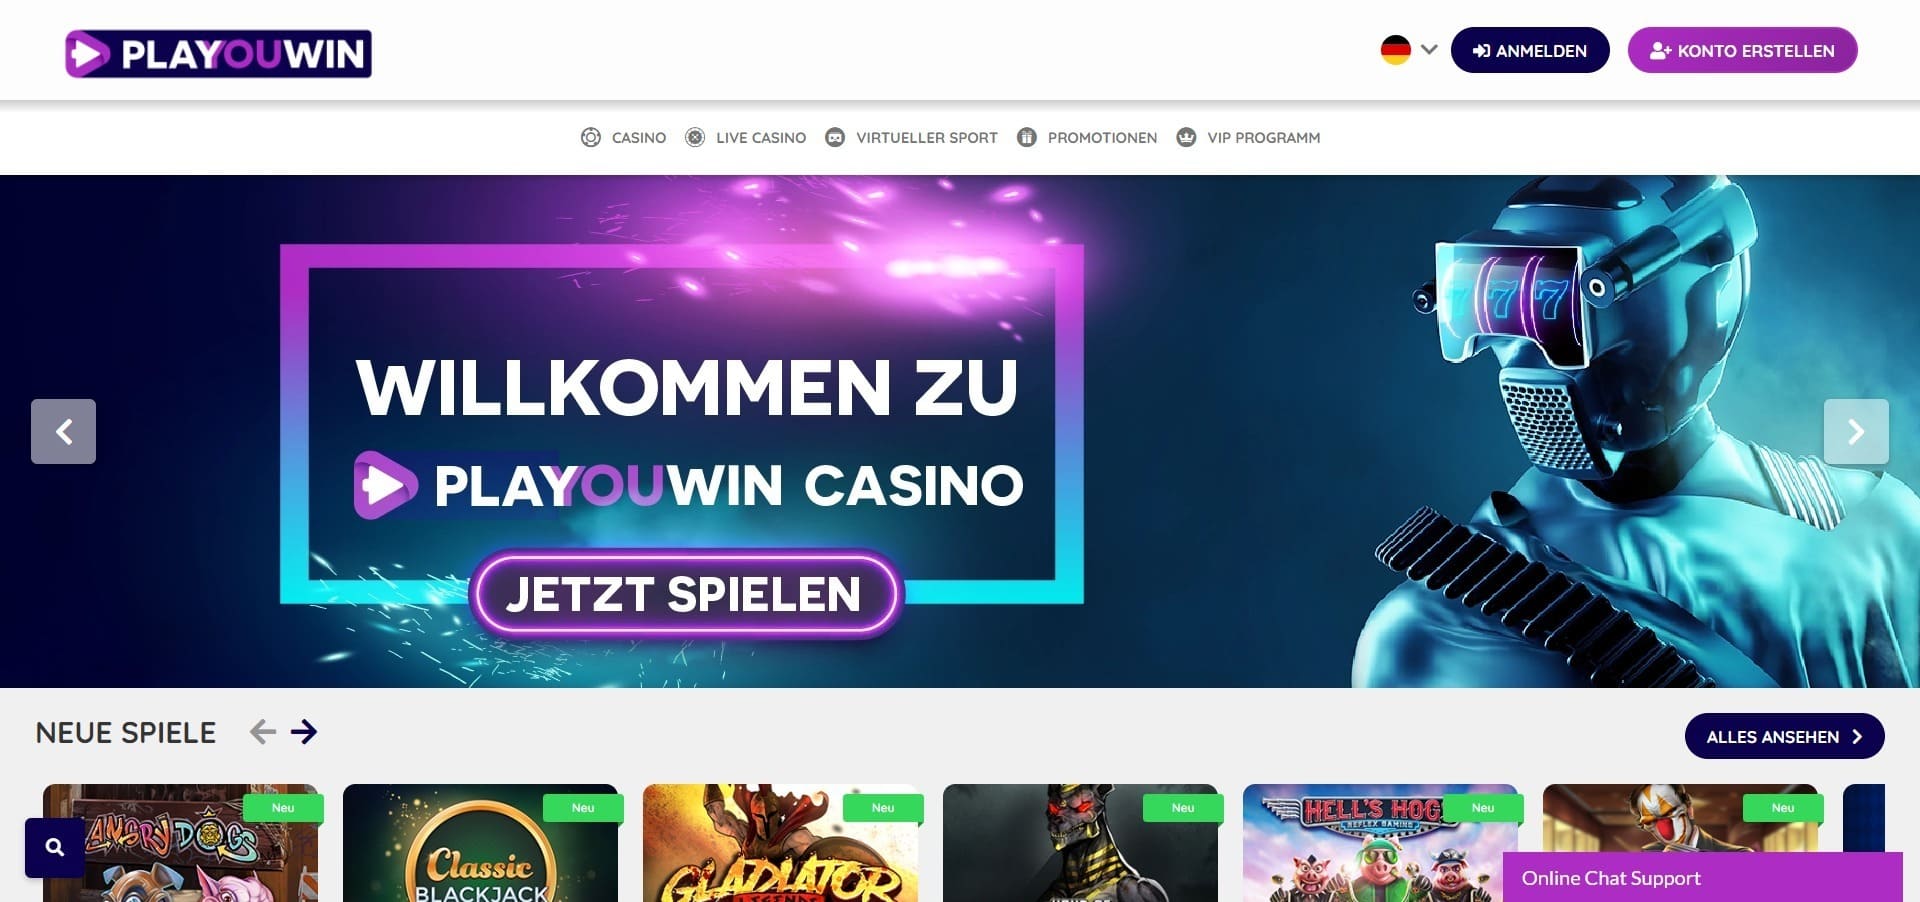 Site officiel de Playouwin Casino